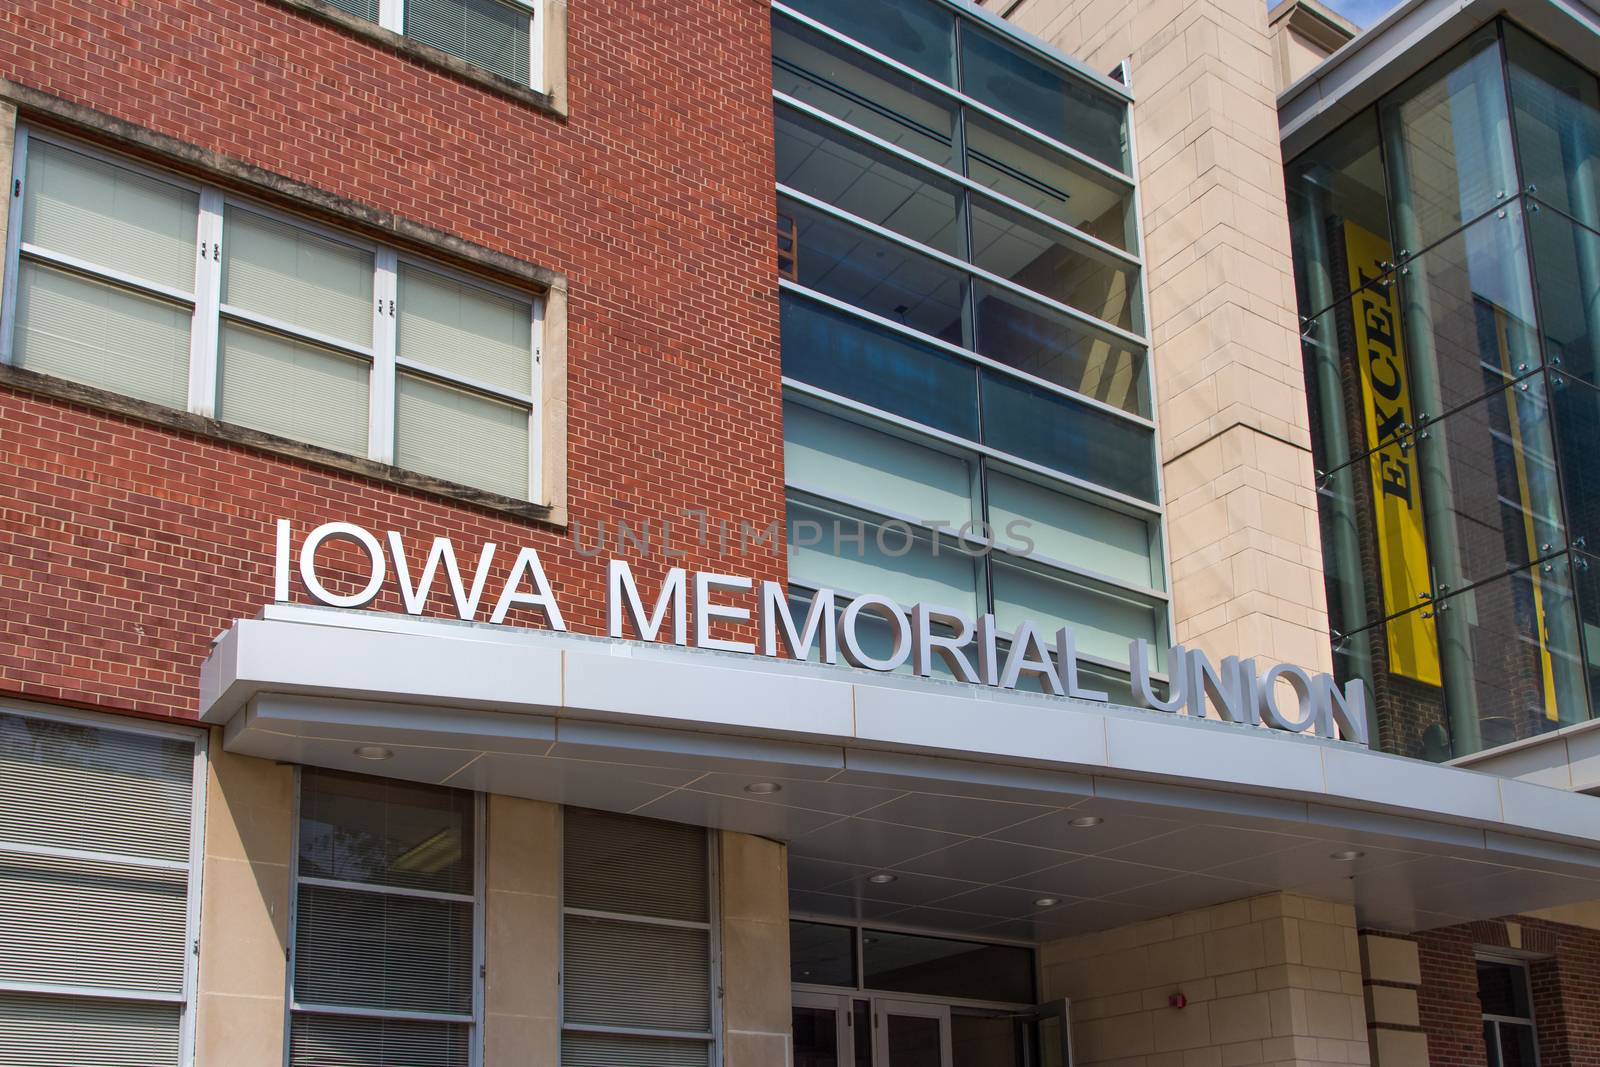 Iowa Memorial Union by wolterk